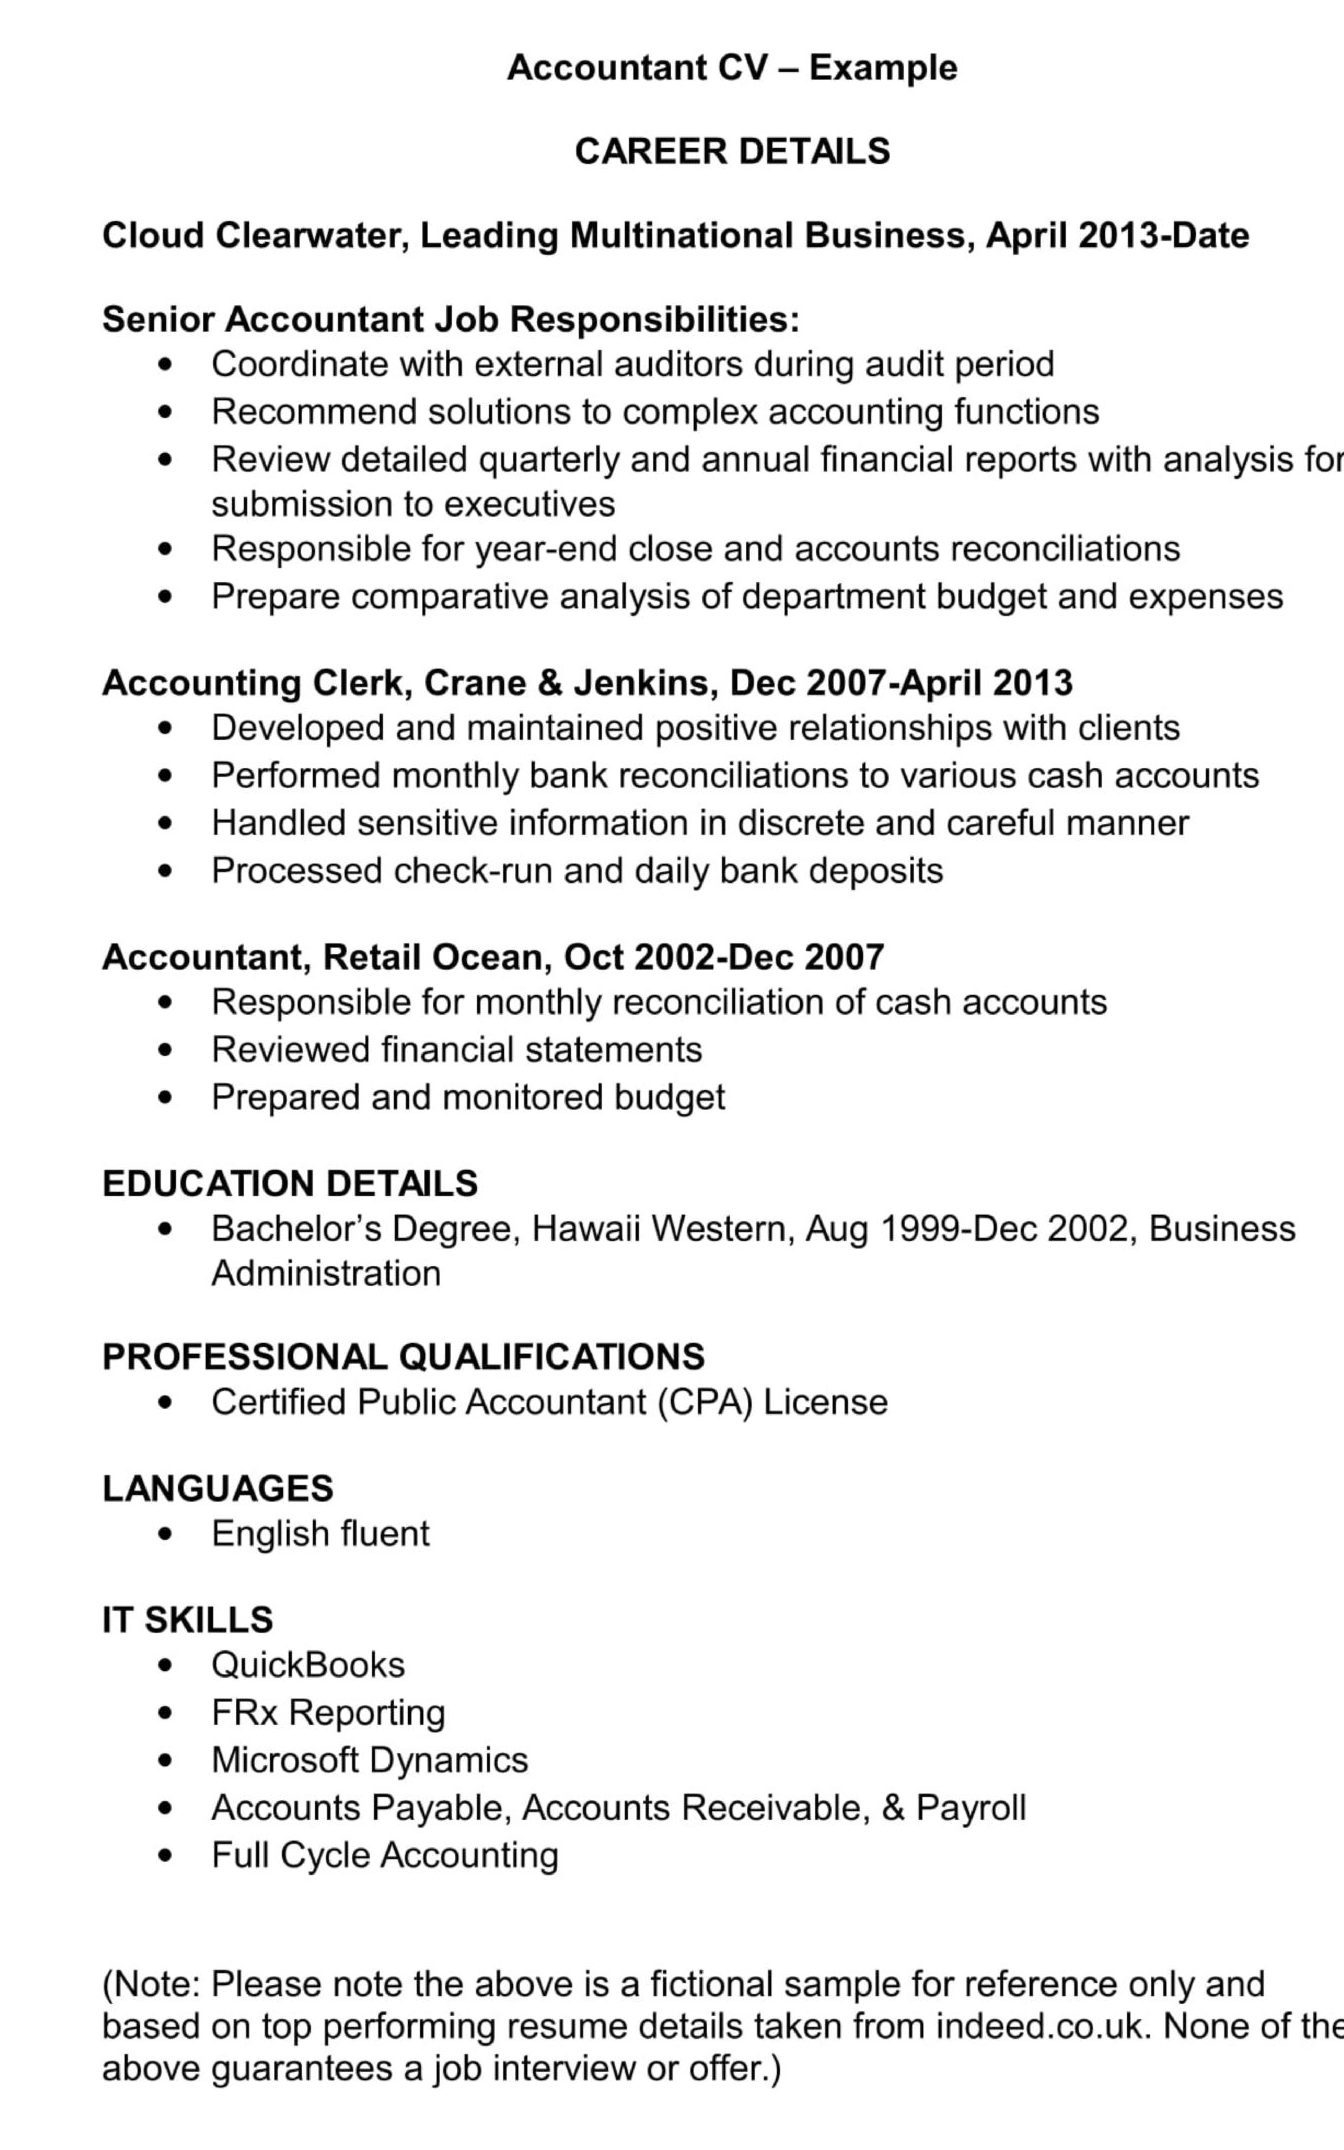 Accountant CV  Template & Examples  Audit, Finance Management Jobs Inside Accounting Job Description Template